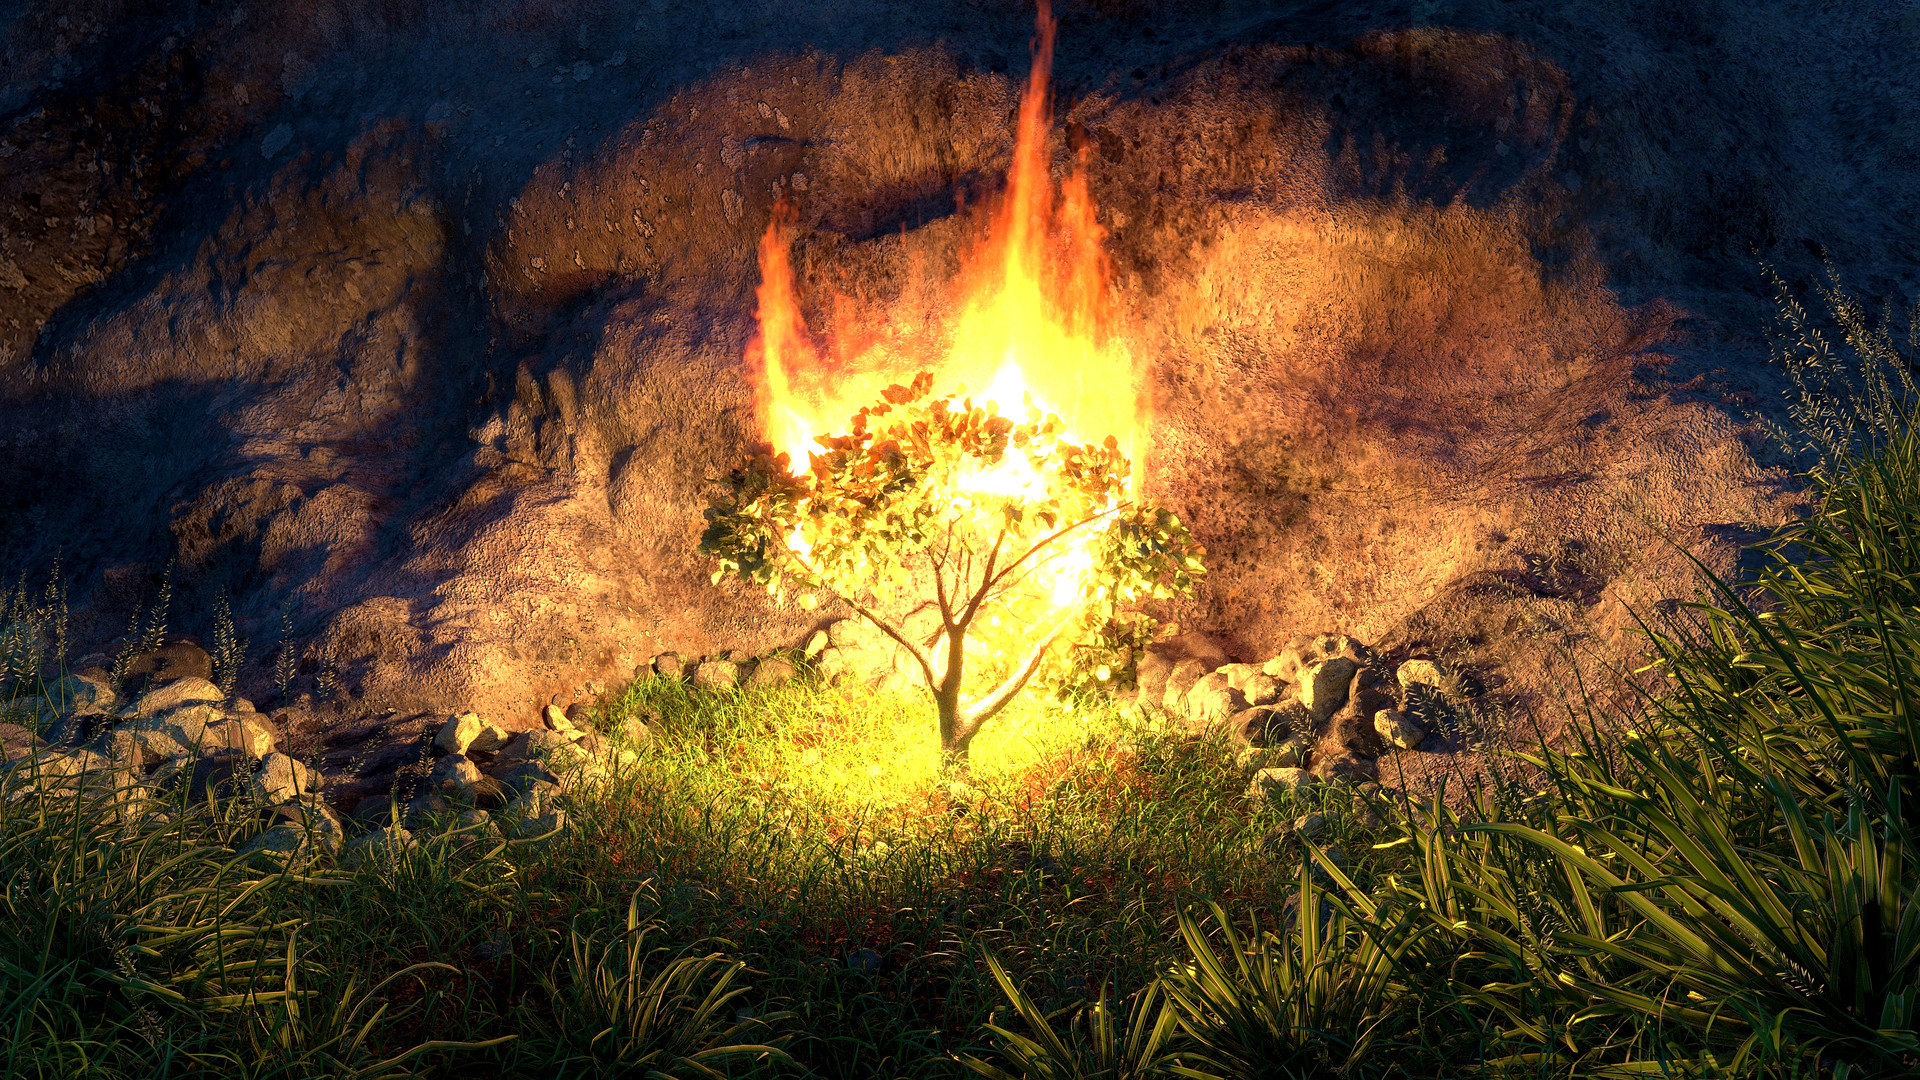 The Flame Tree